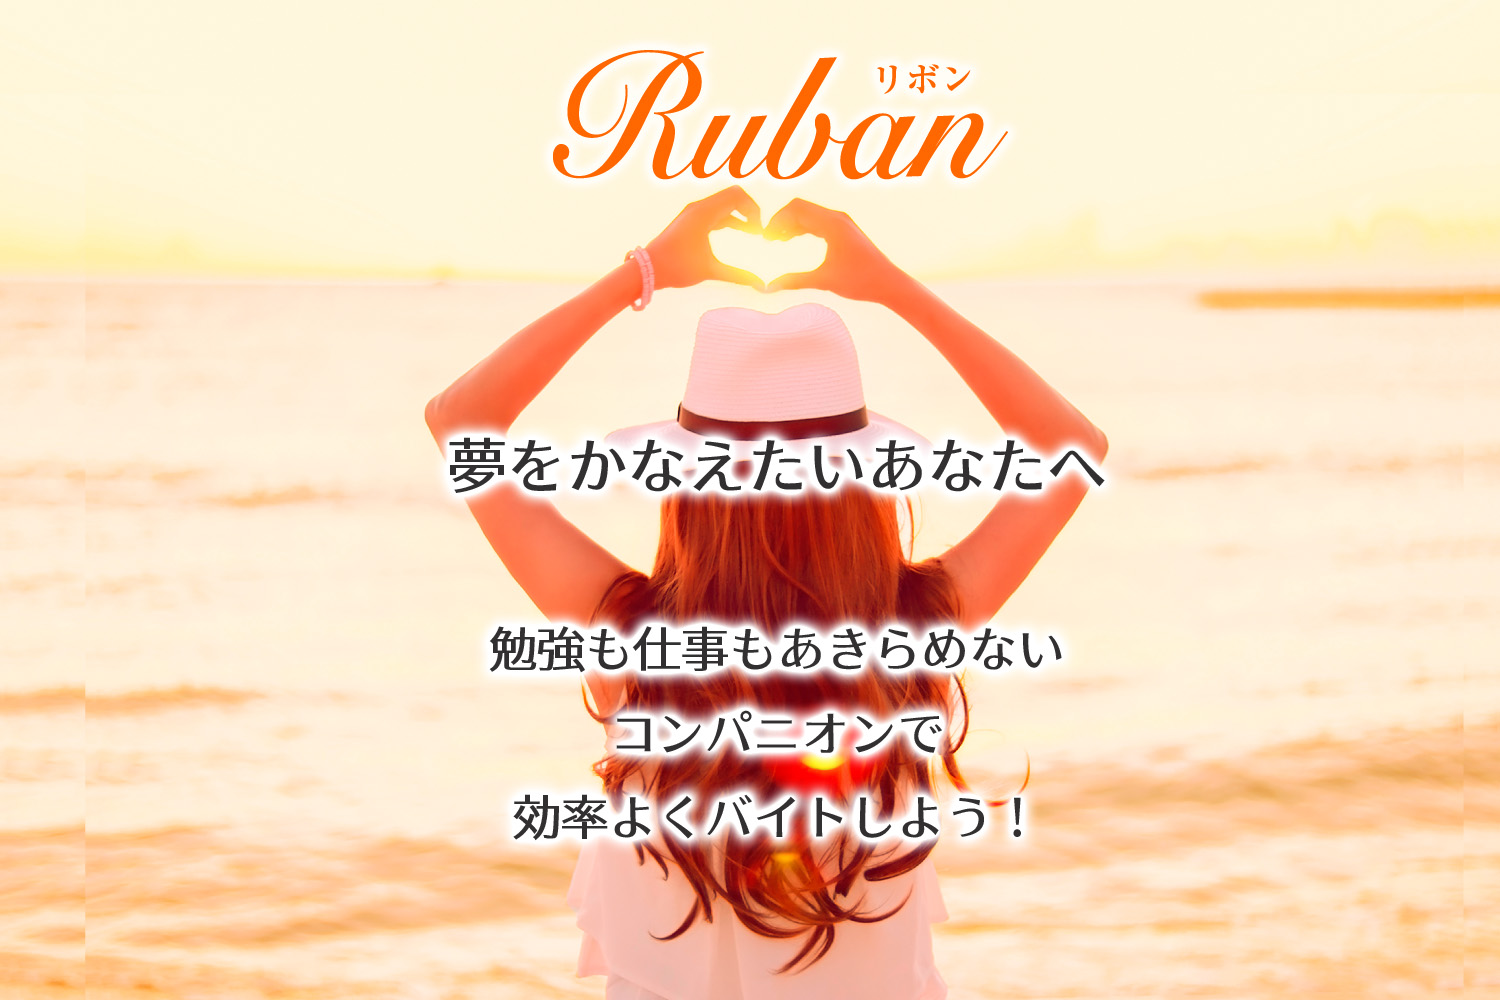 Ruban リボン 名古屋市錦コンパニオン派遣 スタッフはオール女性